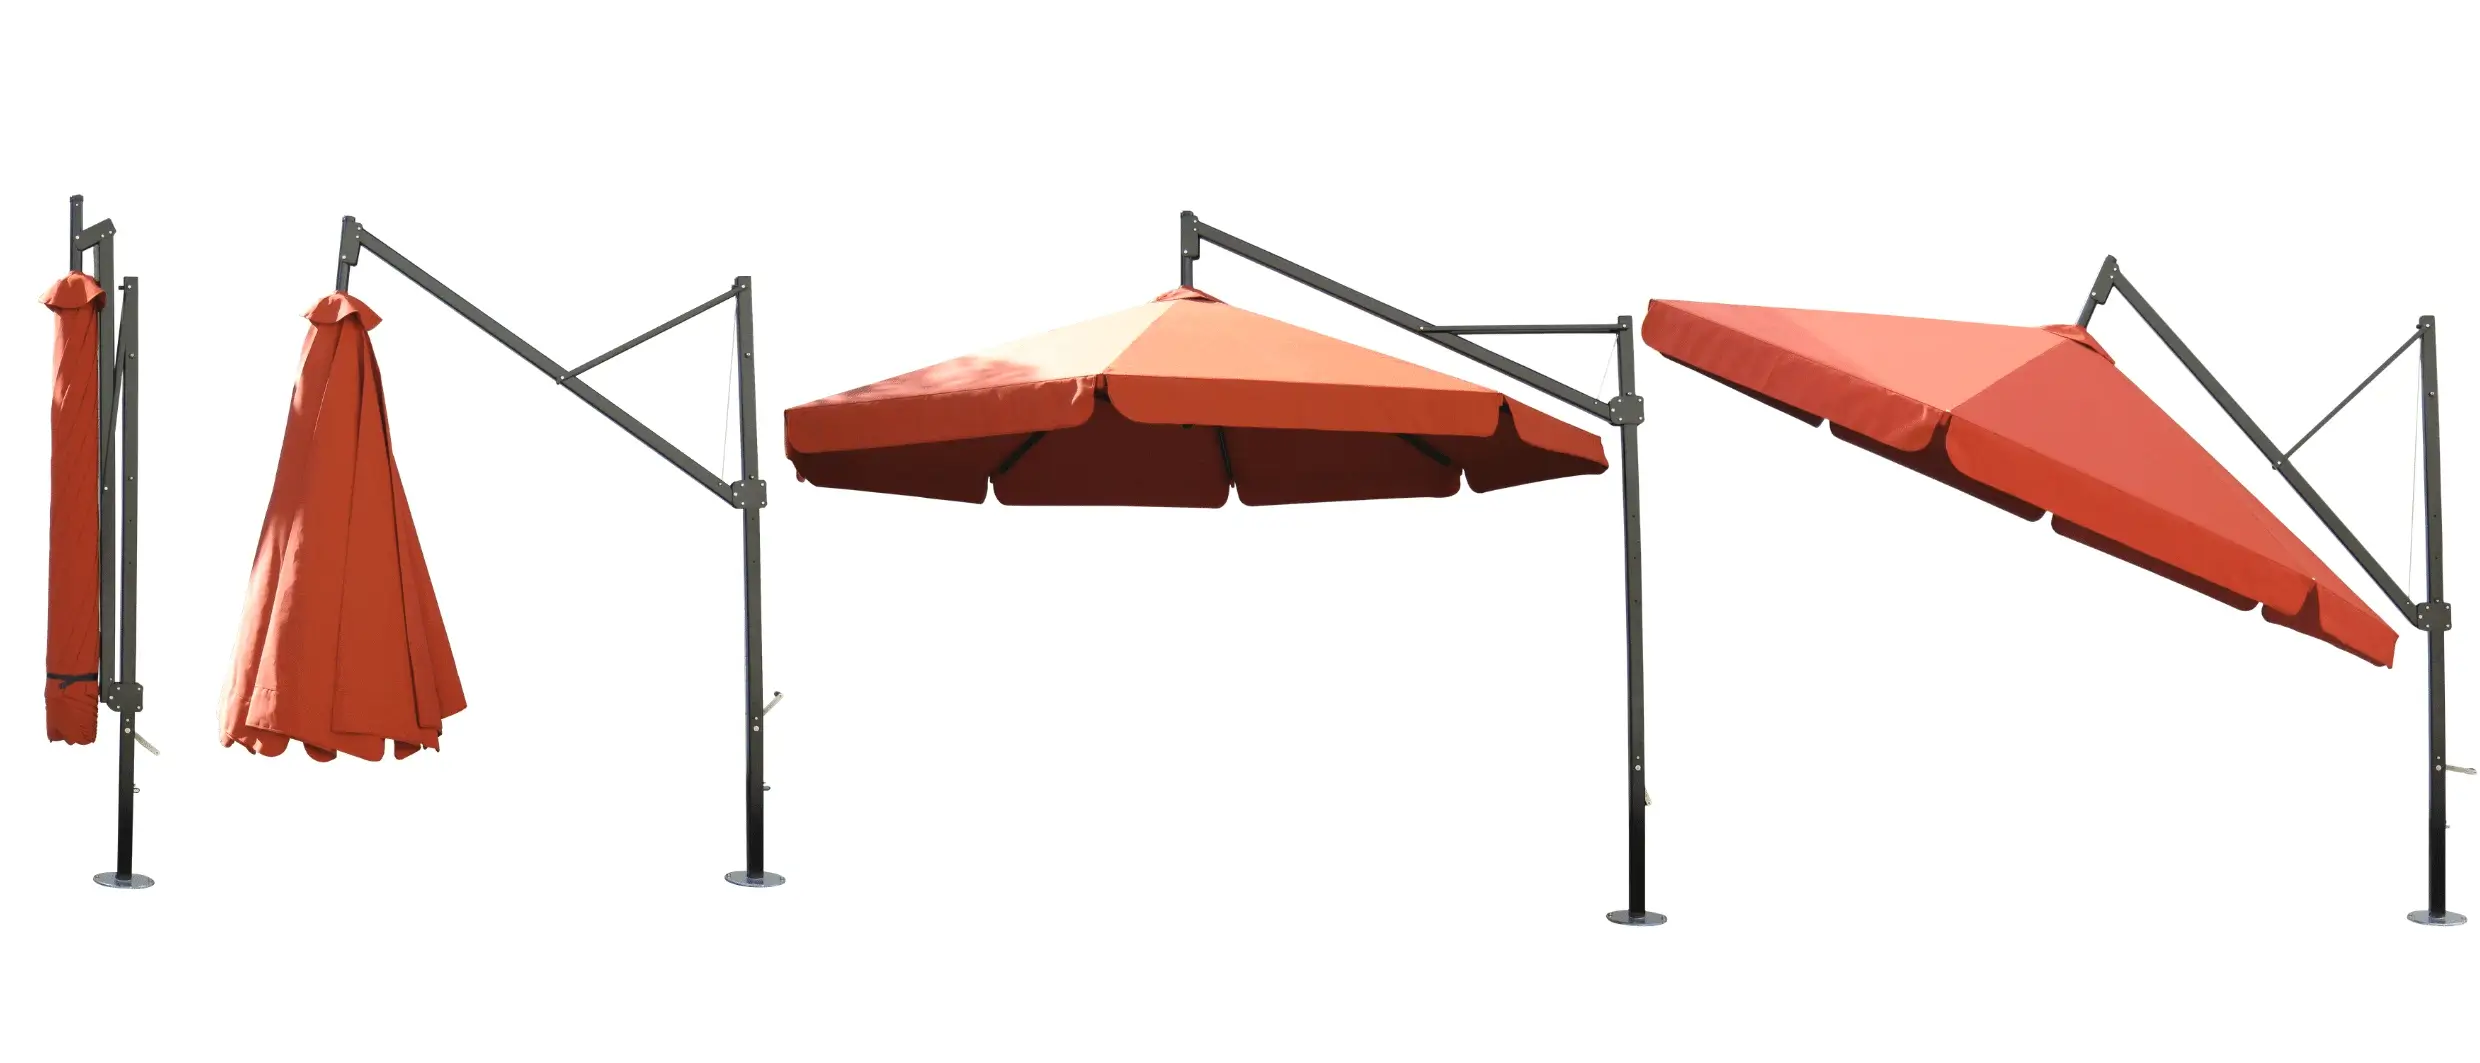 Master shade Umbrella with adjusted angles